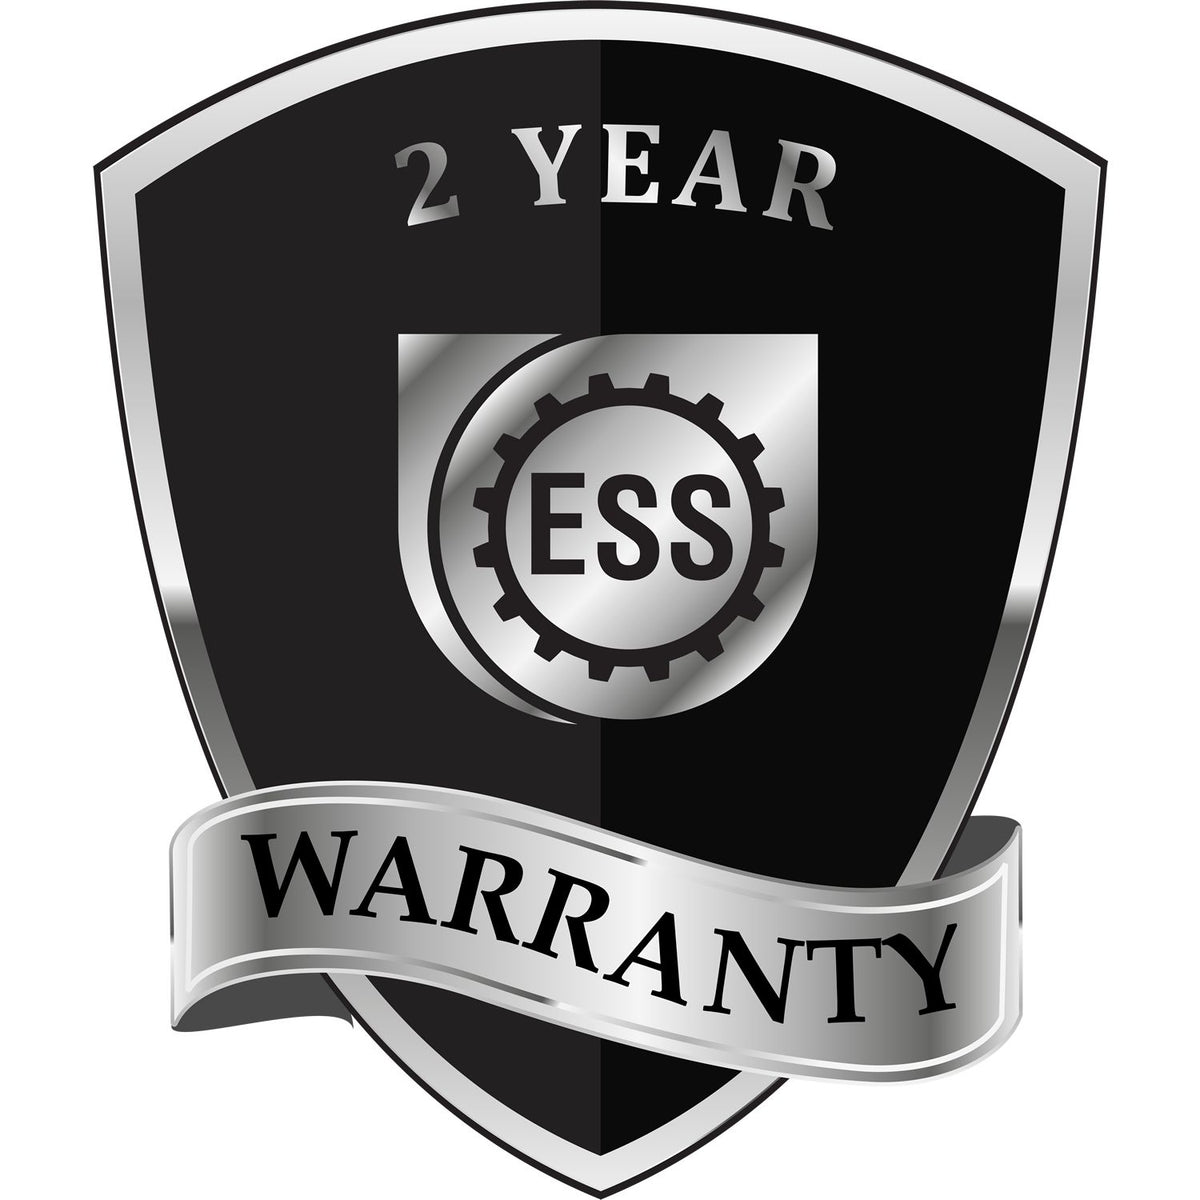 A black and silver badge or emblem showing warranty information for the Gift Florida Land Surveyor Seal